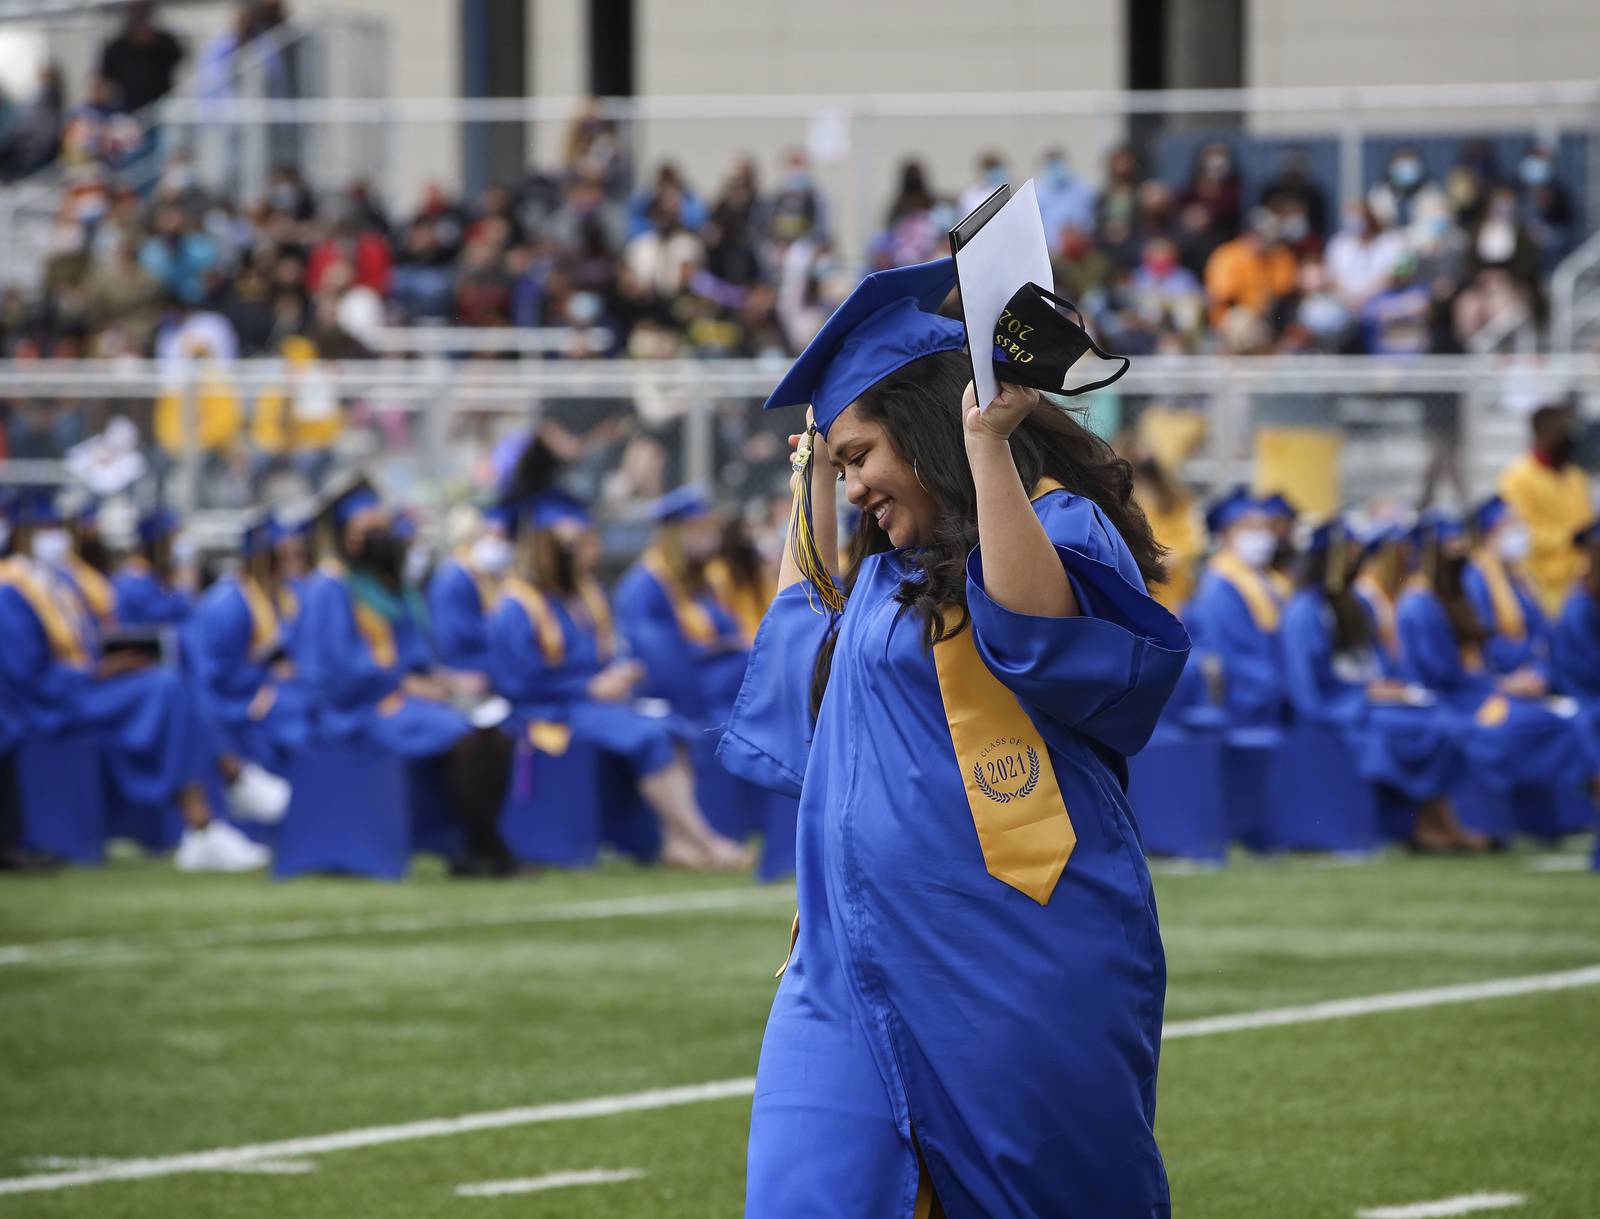 Photos Bartlett High School’s outdoor graduation ceremony